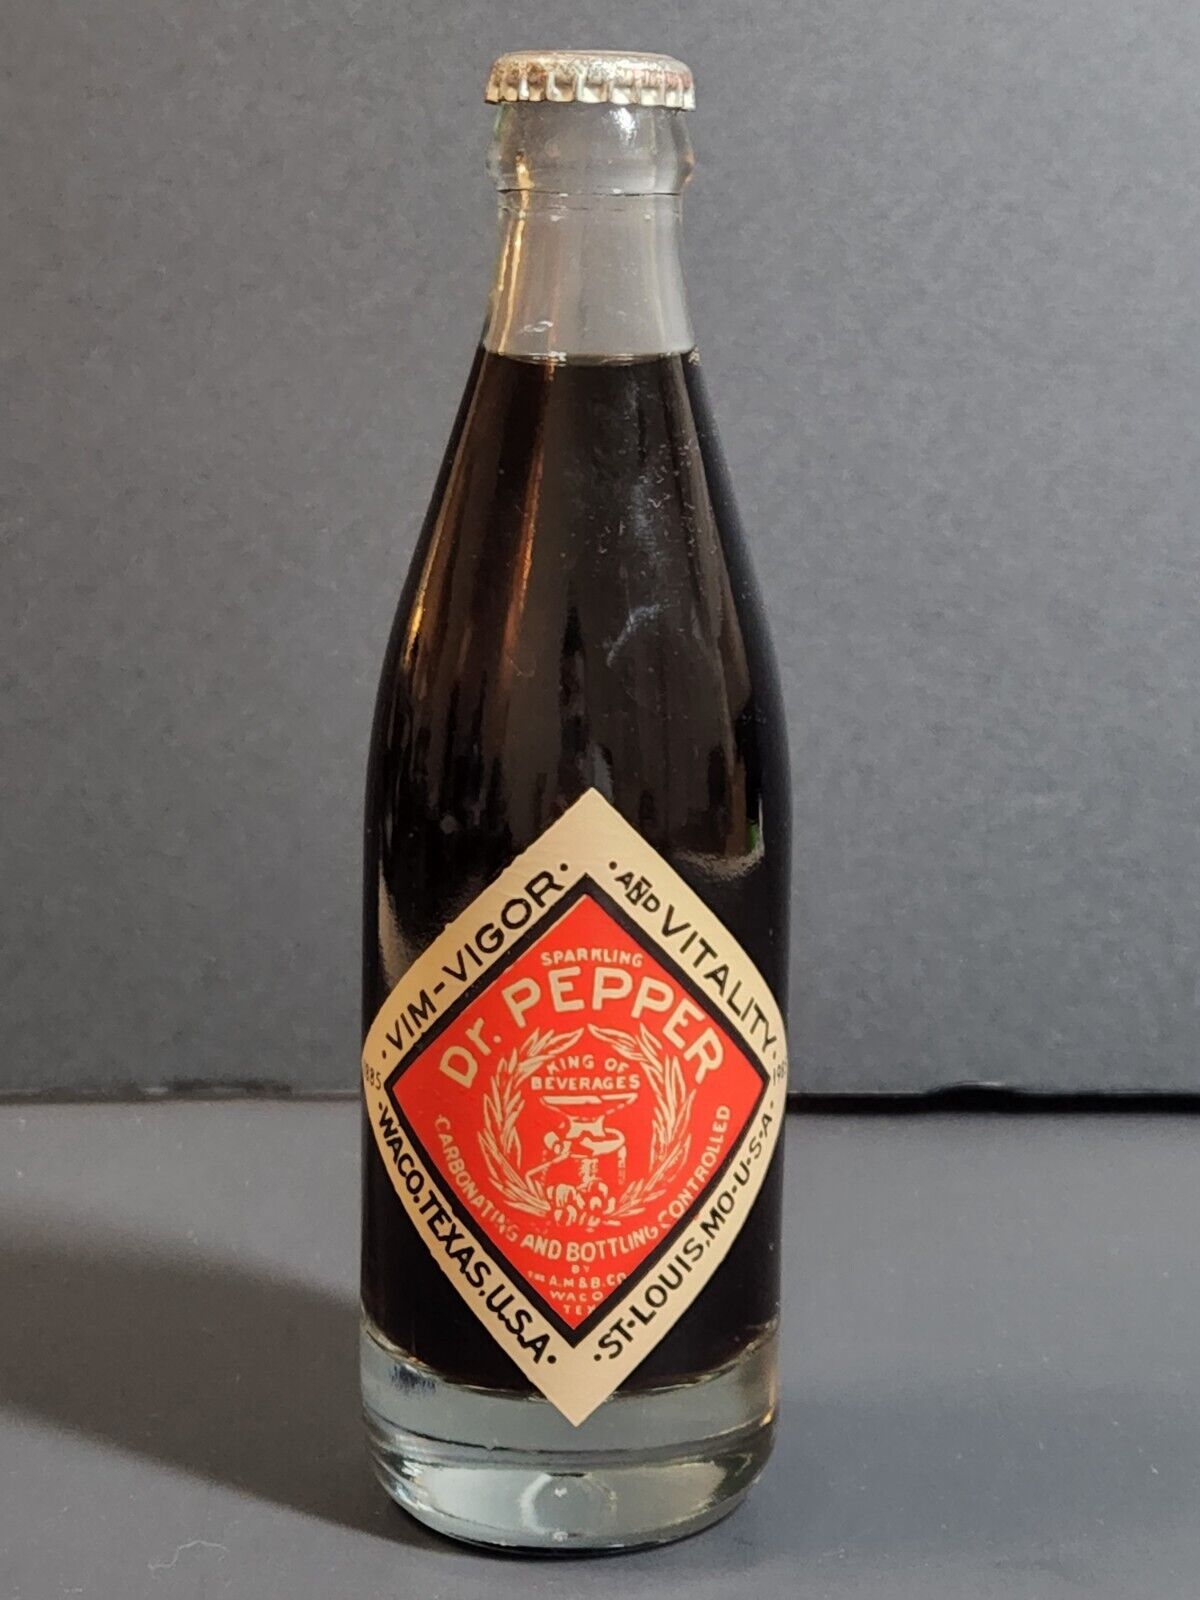 Vtg Dr Pepper THIEF Bottle VIM Vigor & Vitality Waco TX A.M. & B. Co 1885-1985